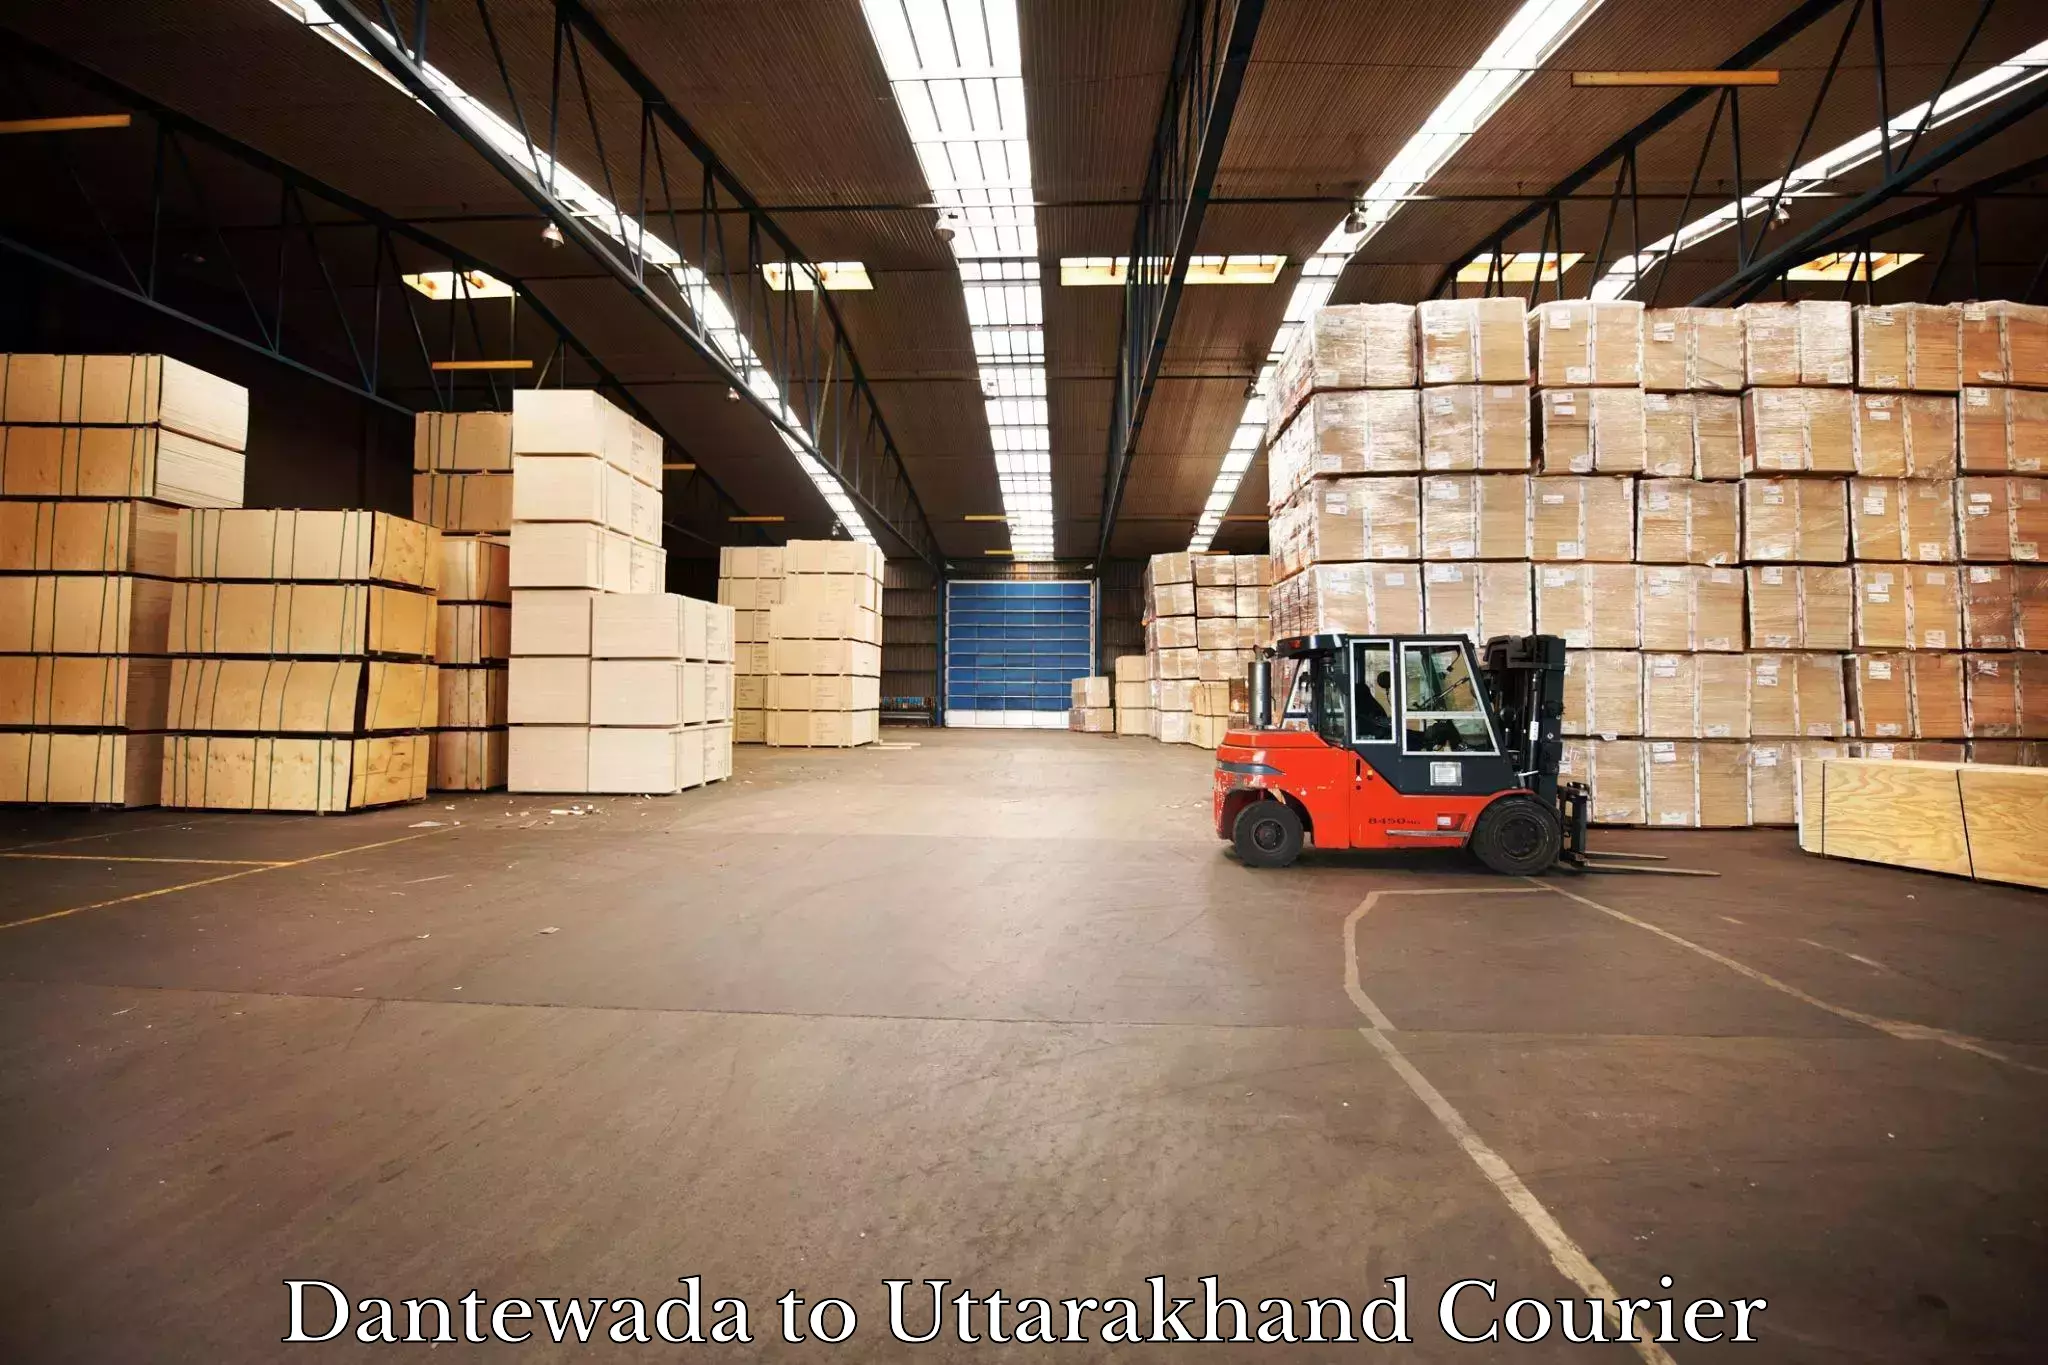 State-of-the-art courier technology Dantewada to Uttarakhand